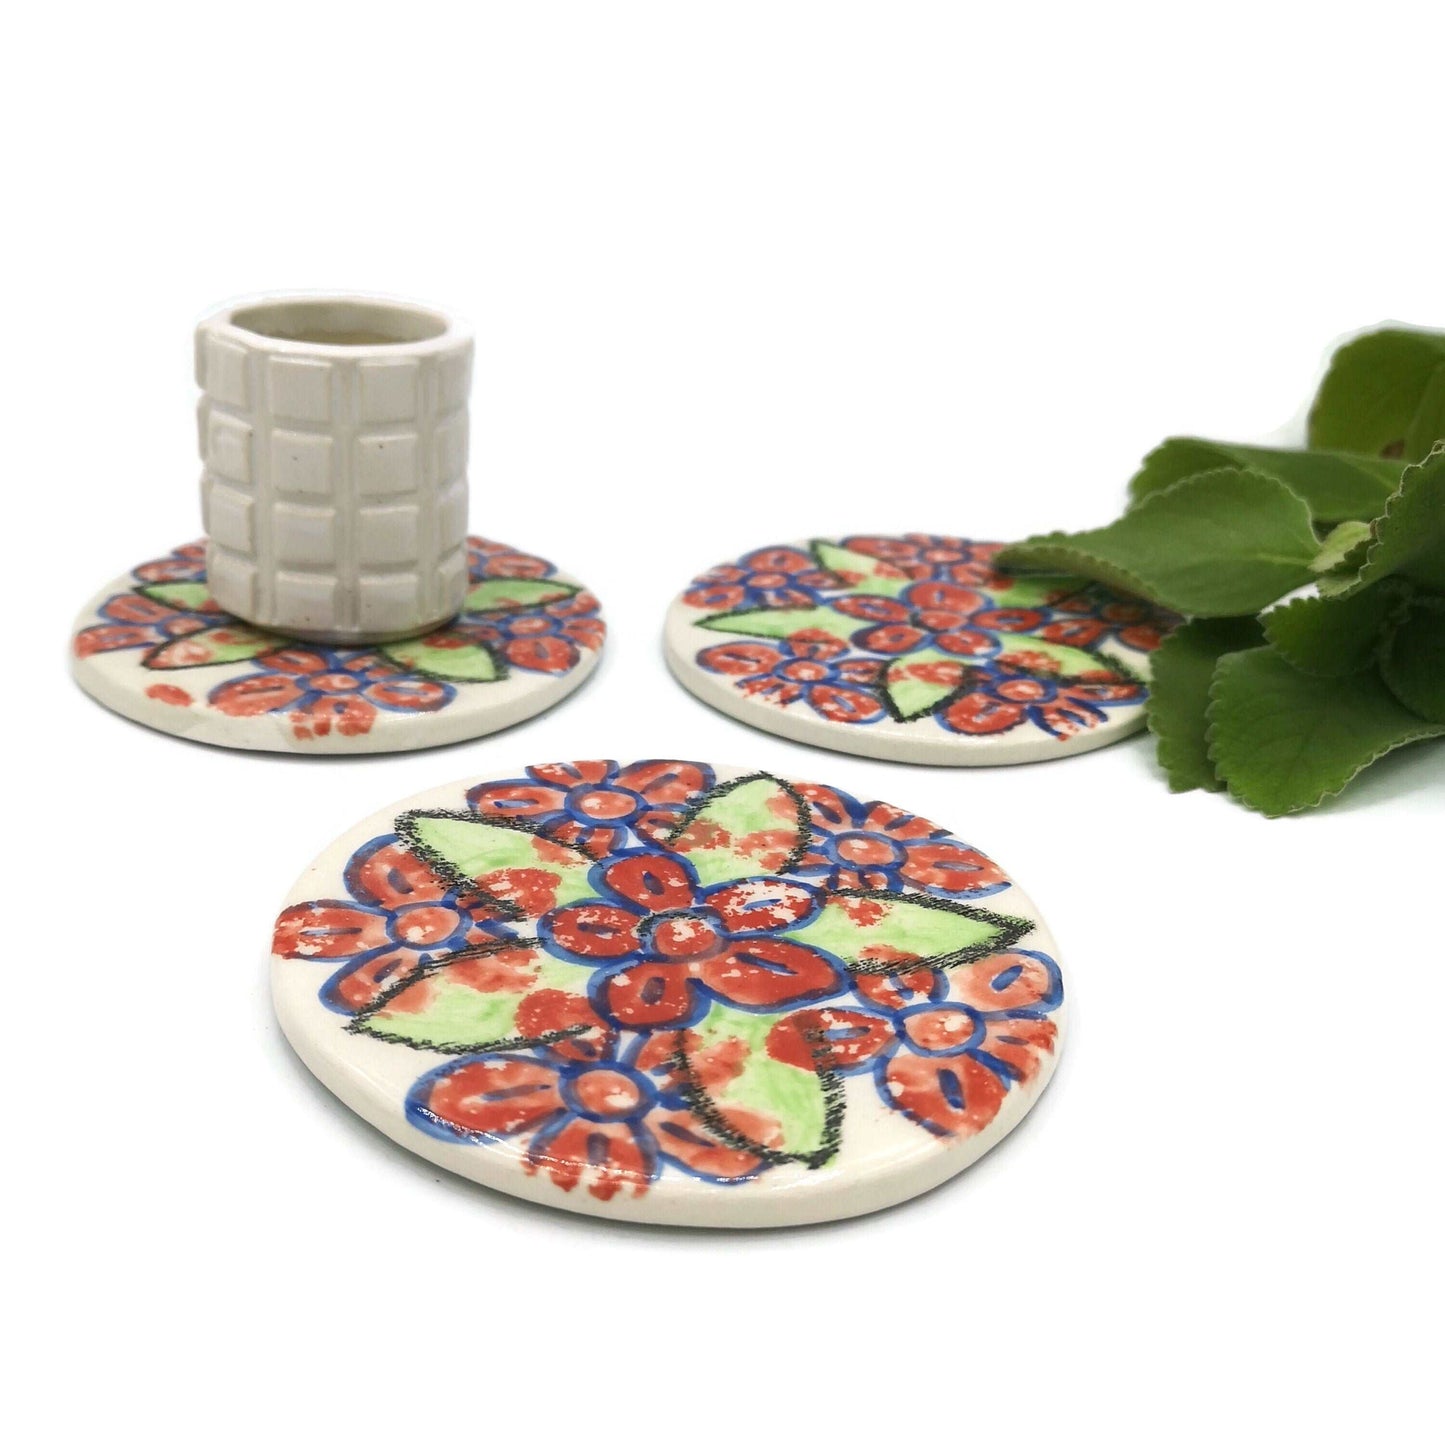 1Pc Handpainted Floral Large Handmade Ceramic Coaster Tile, Office Desk Accessories for Women, Cork Backing Round Artisan Botanical Coaster